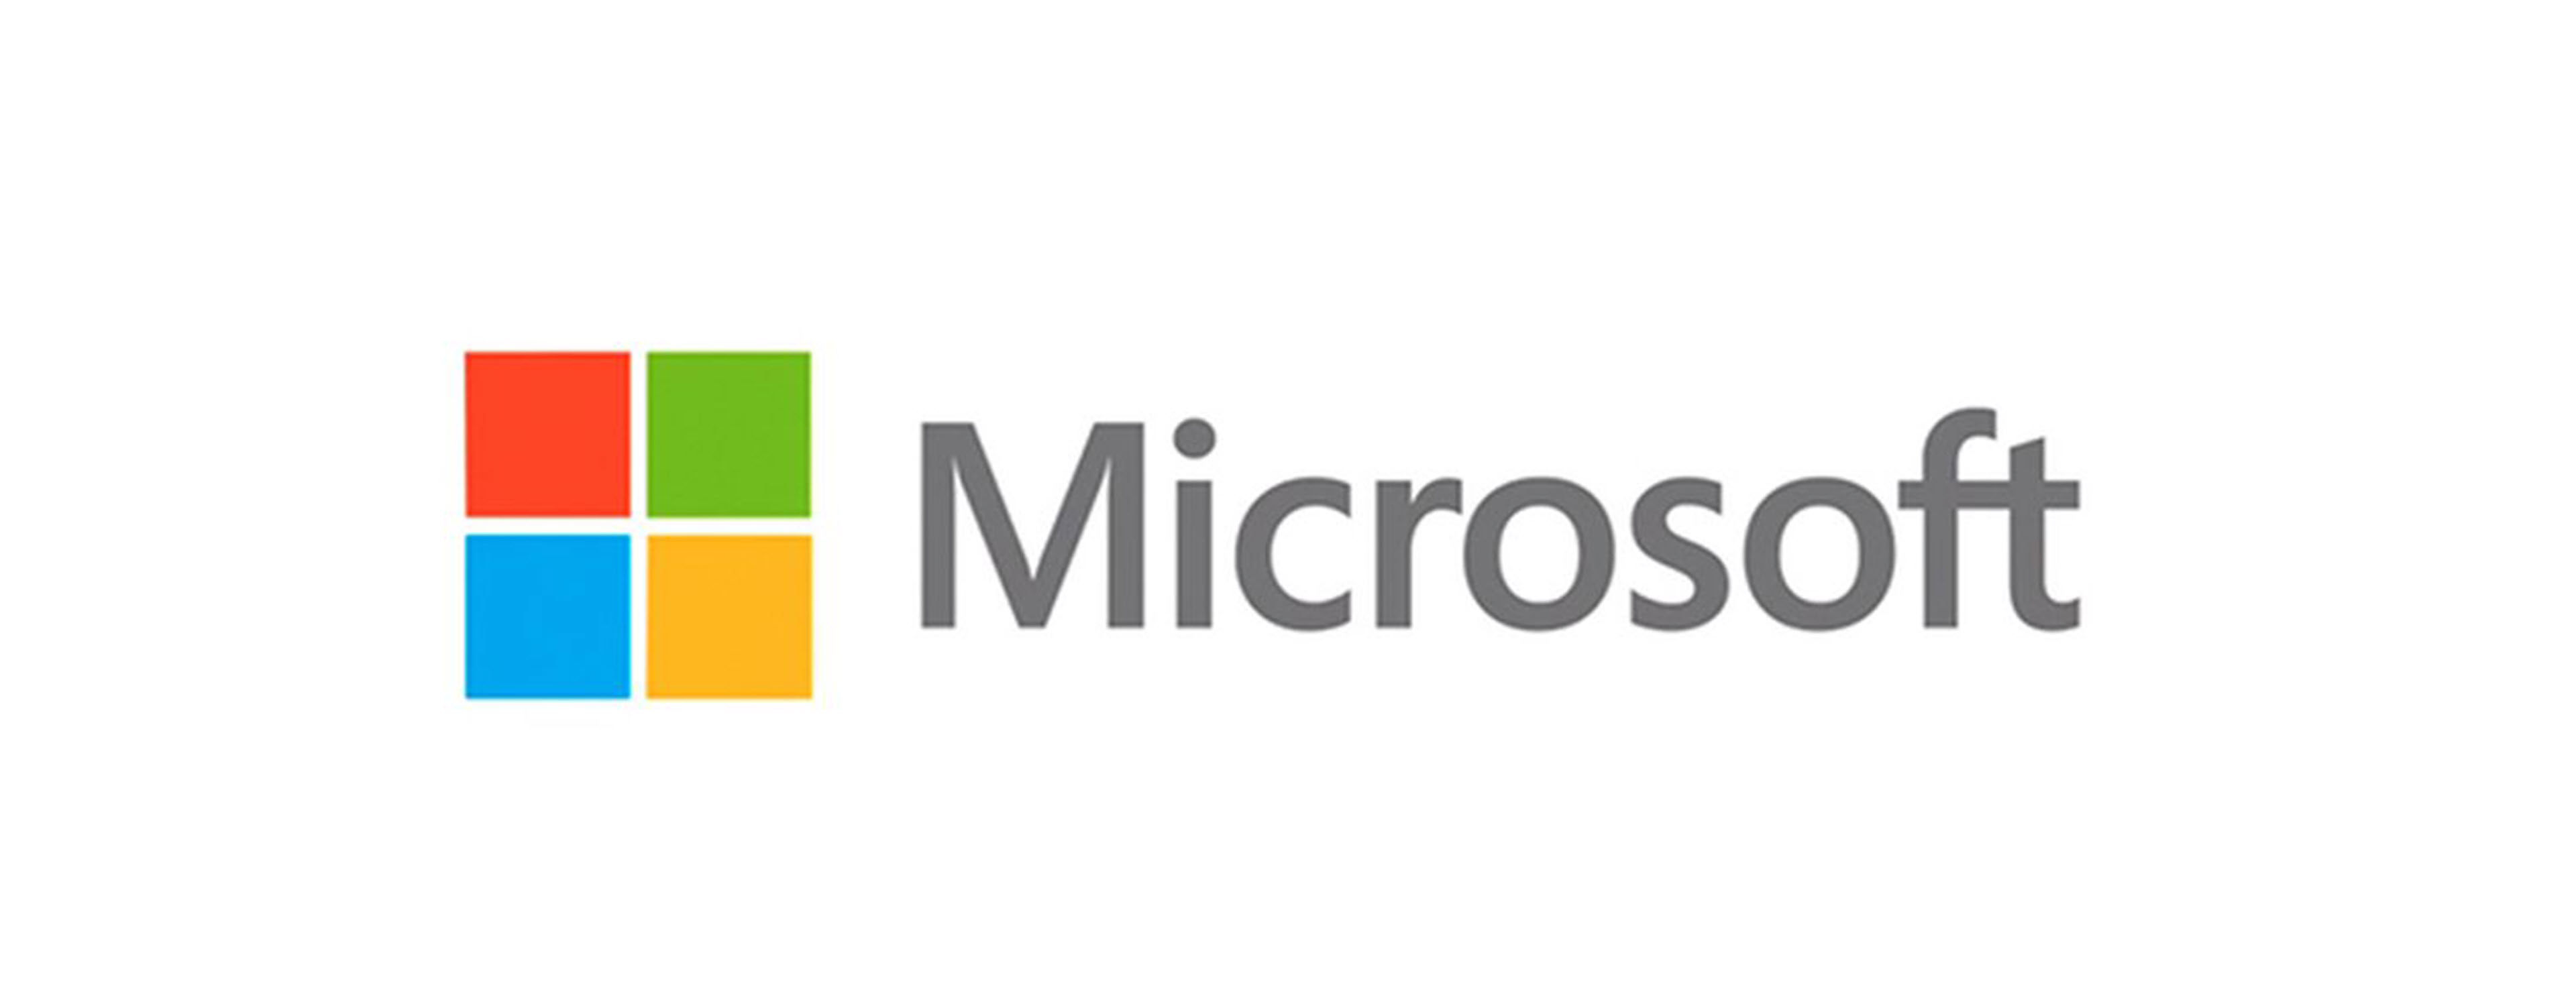             Microsoft-Logo        